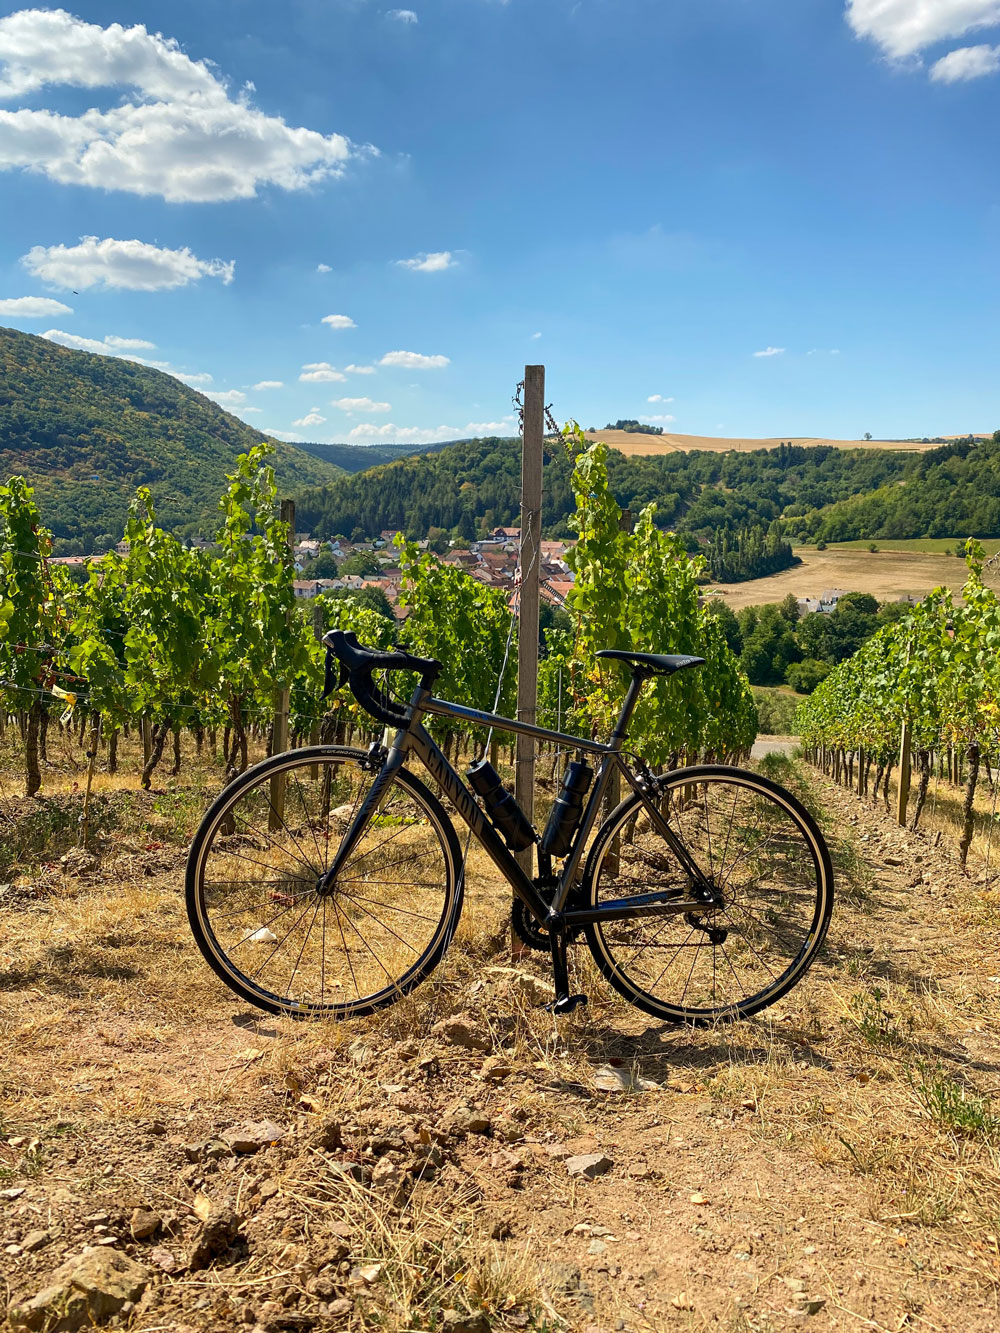 Picnic, Cellar Visit and an E-Bike Excursion through the Vineyards